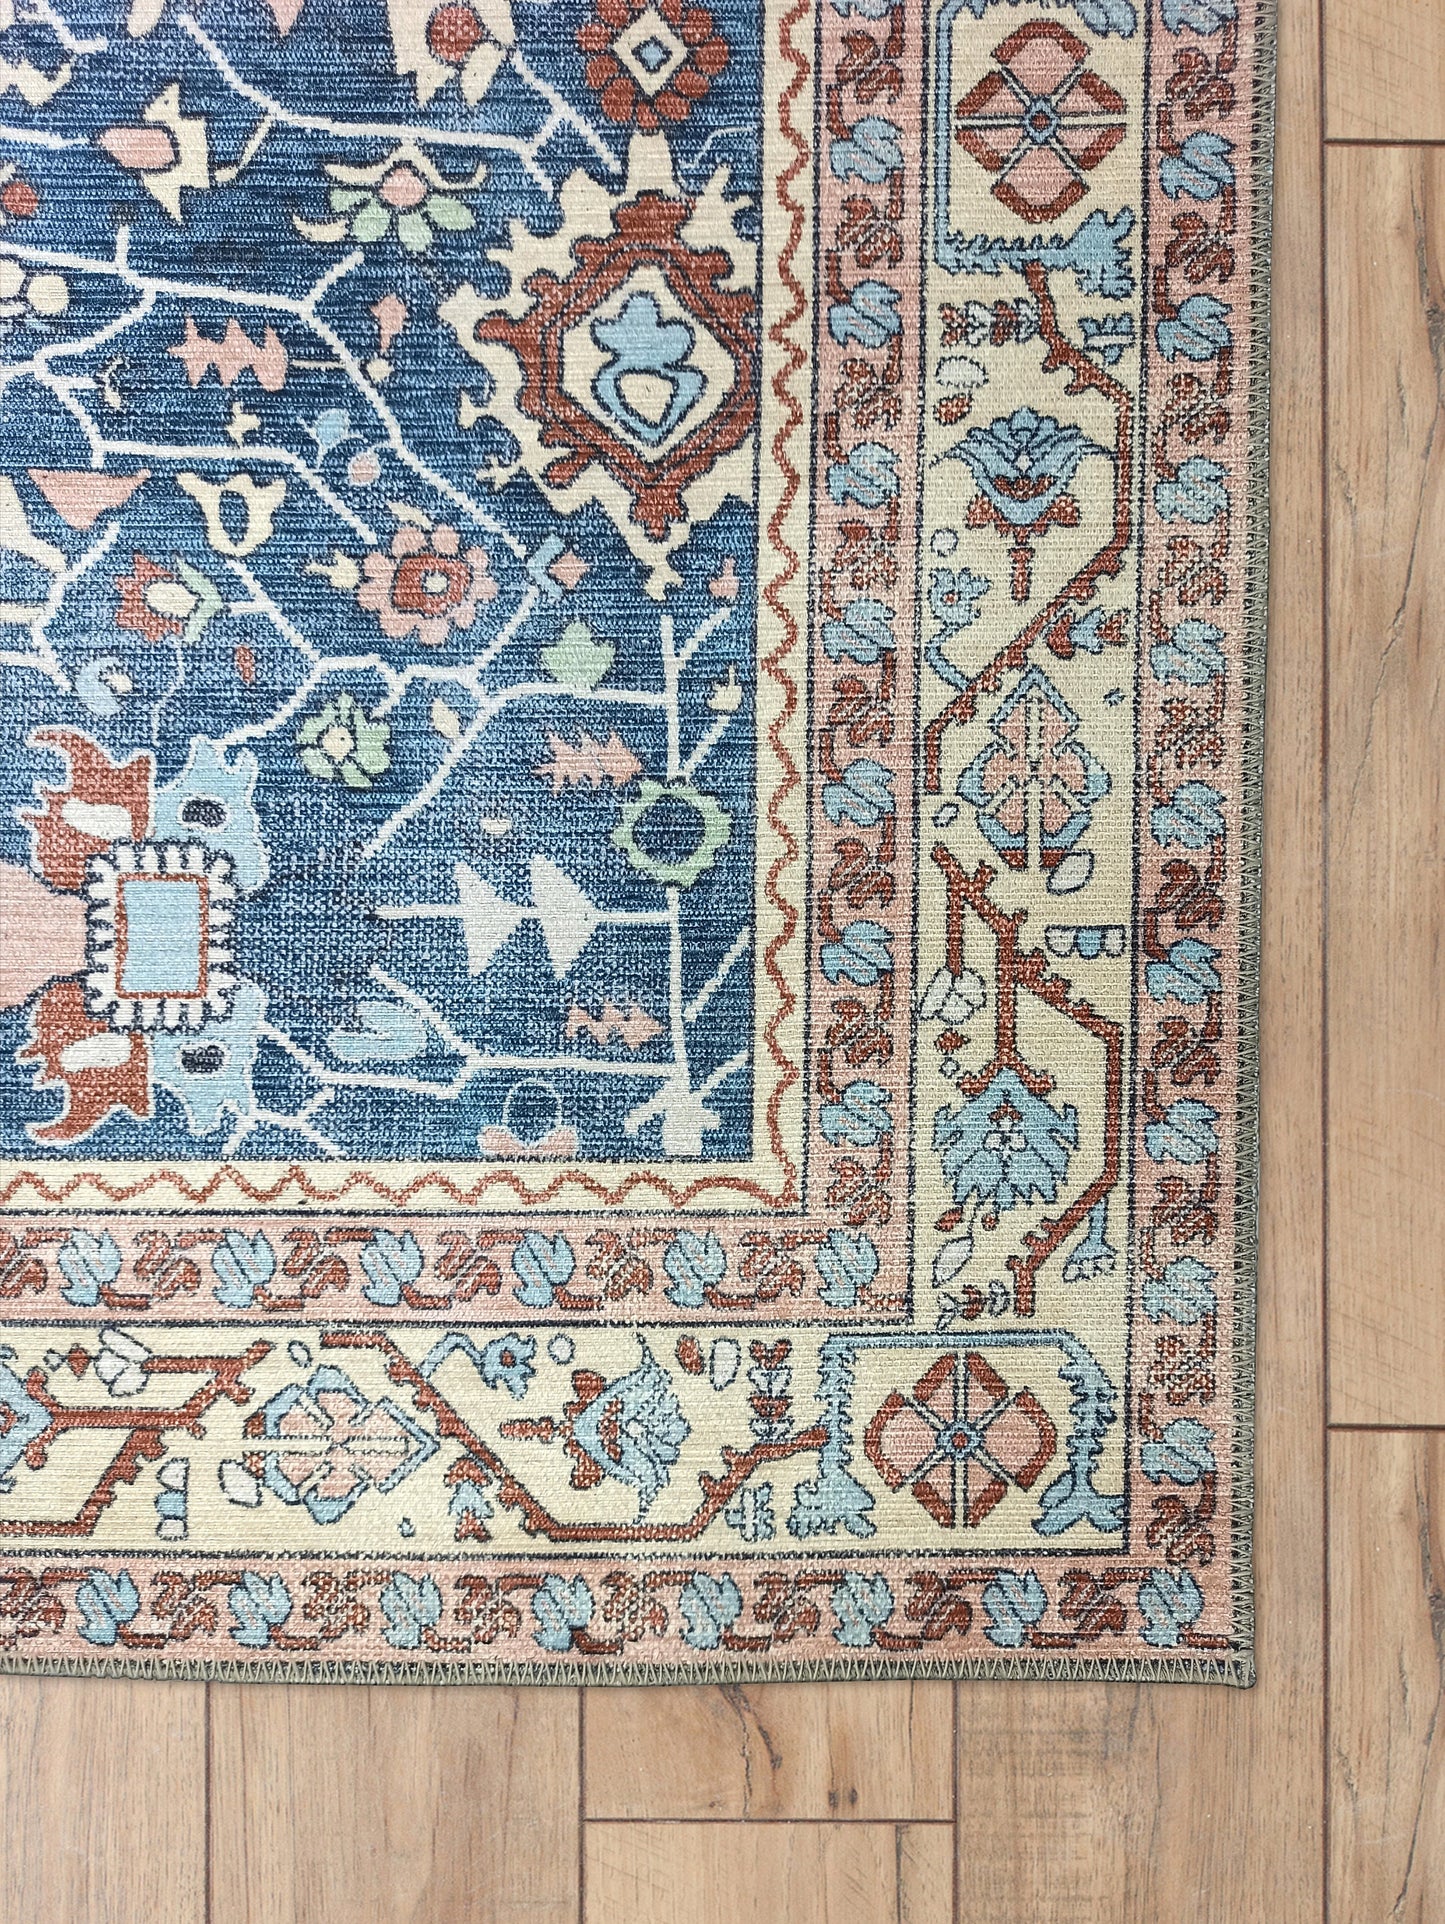 Turkish Oushak Vintage Rug, Shades of Blue Boho Oriental Geometric Floral Antique Persian Inspired Modern Area Rugs Living room Bedroom Hall